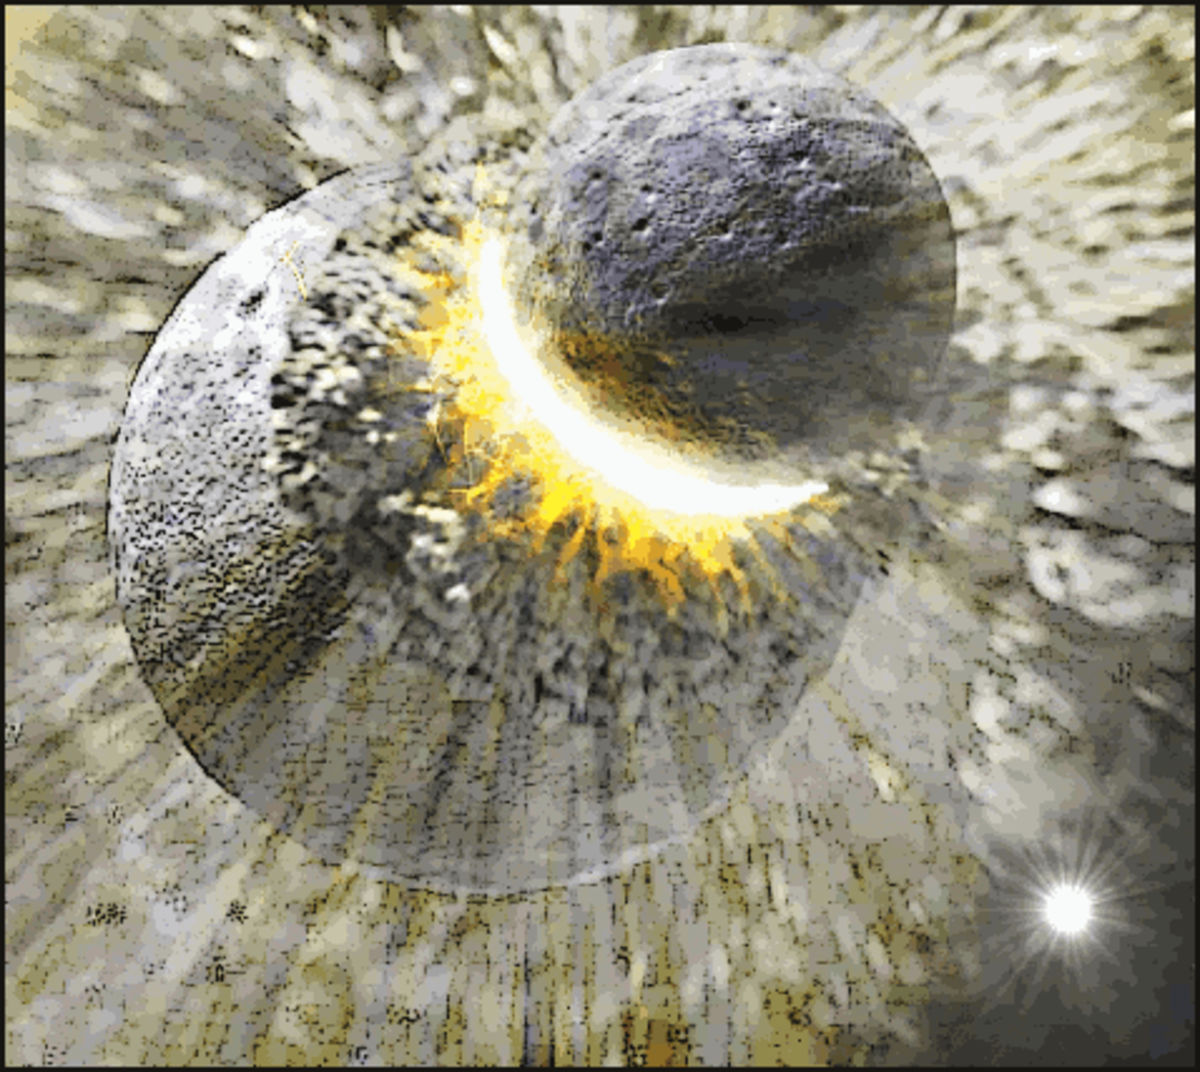 Asteroid collision